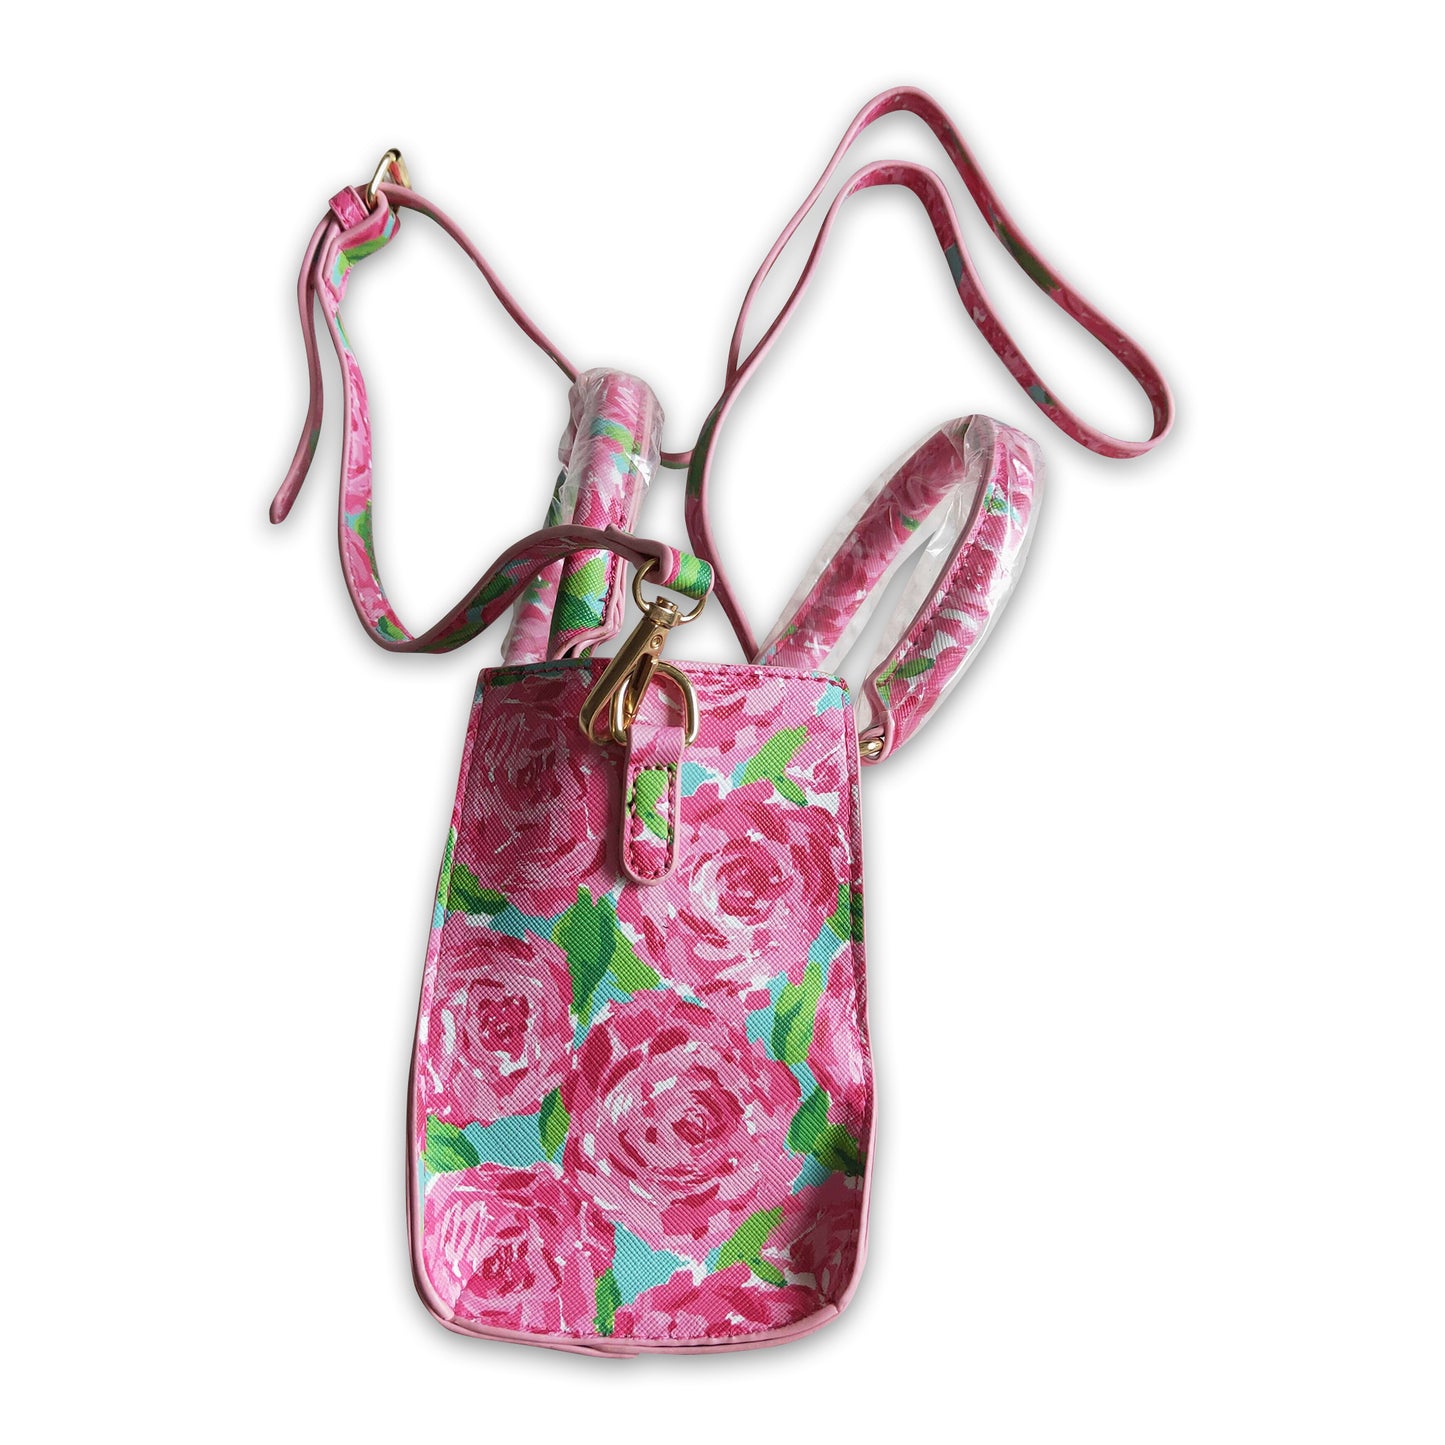 Hot pink floral kids girls bags